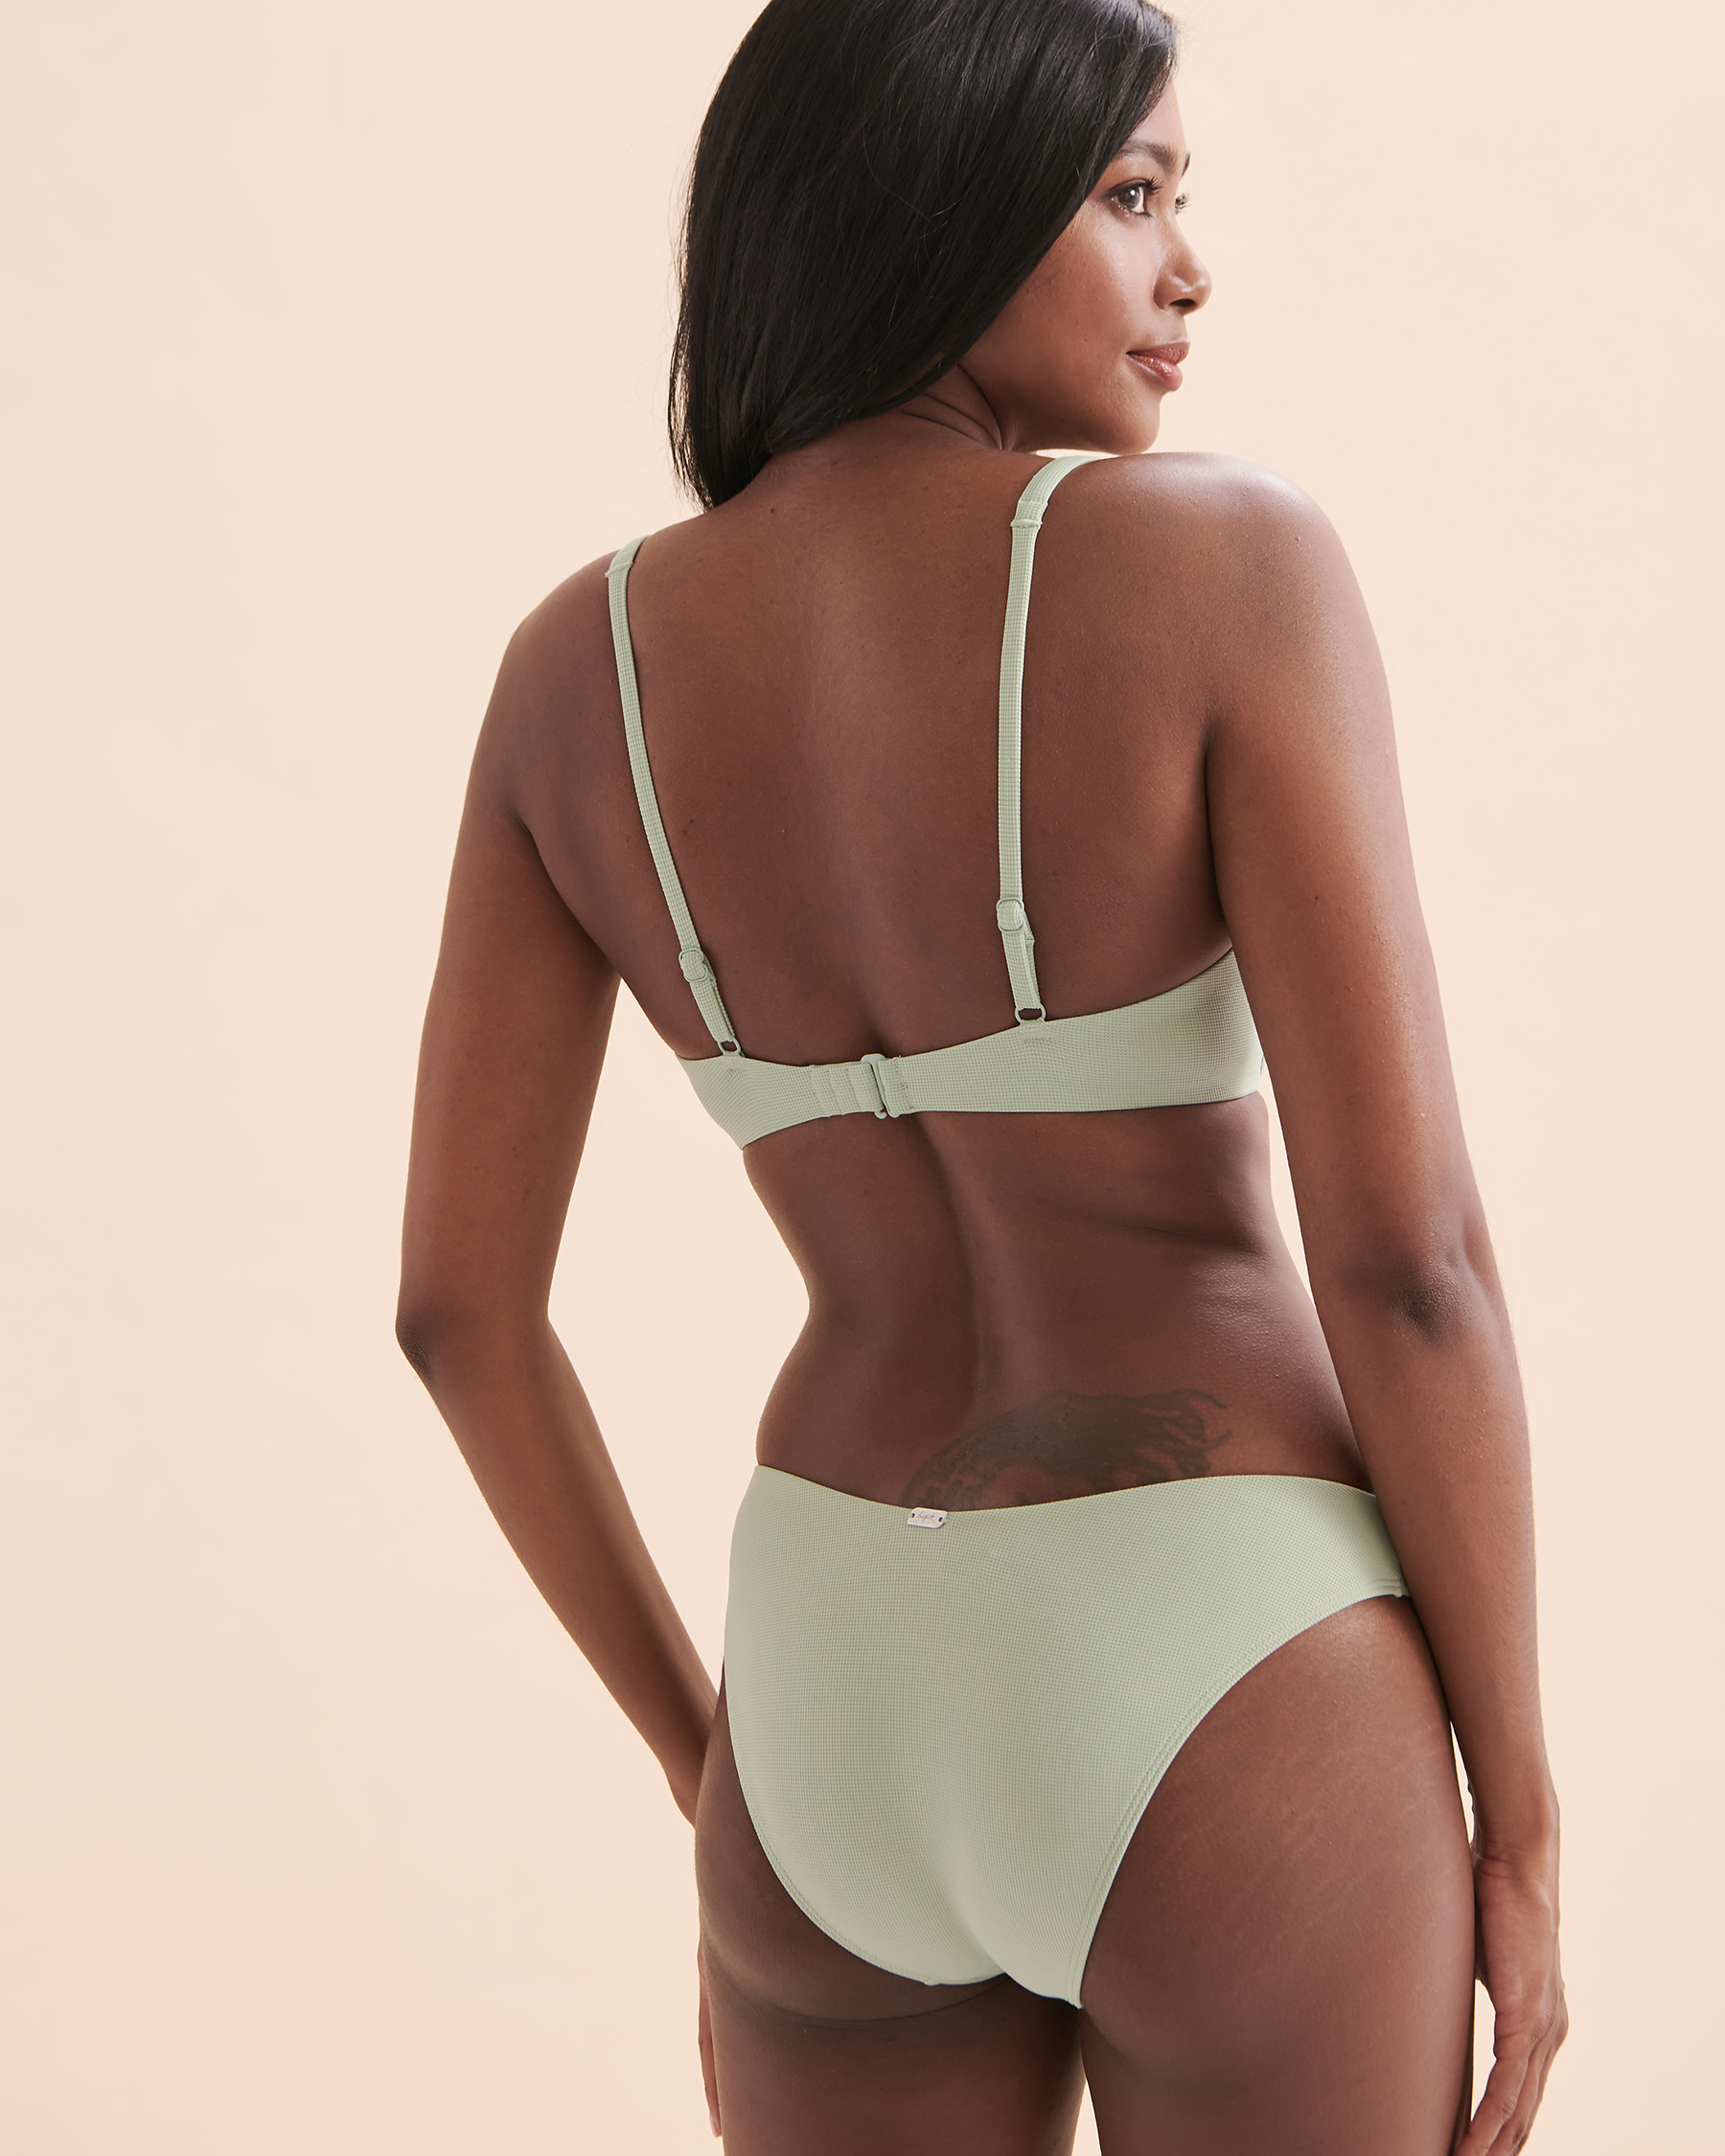 TROPIK Textured Underwire Bralette Bikini Top Frosty Green 01100247 - View2